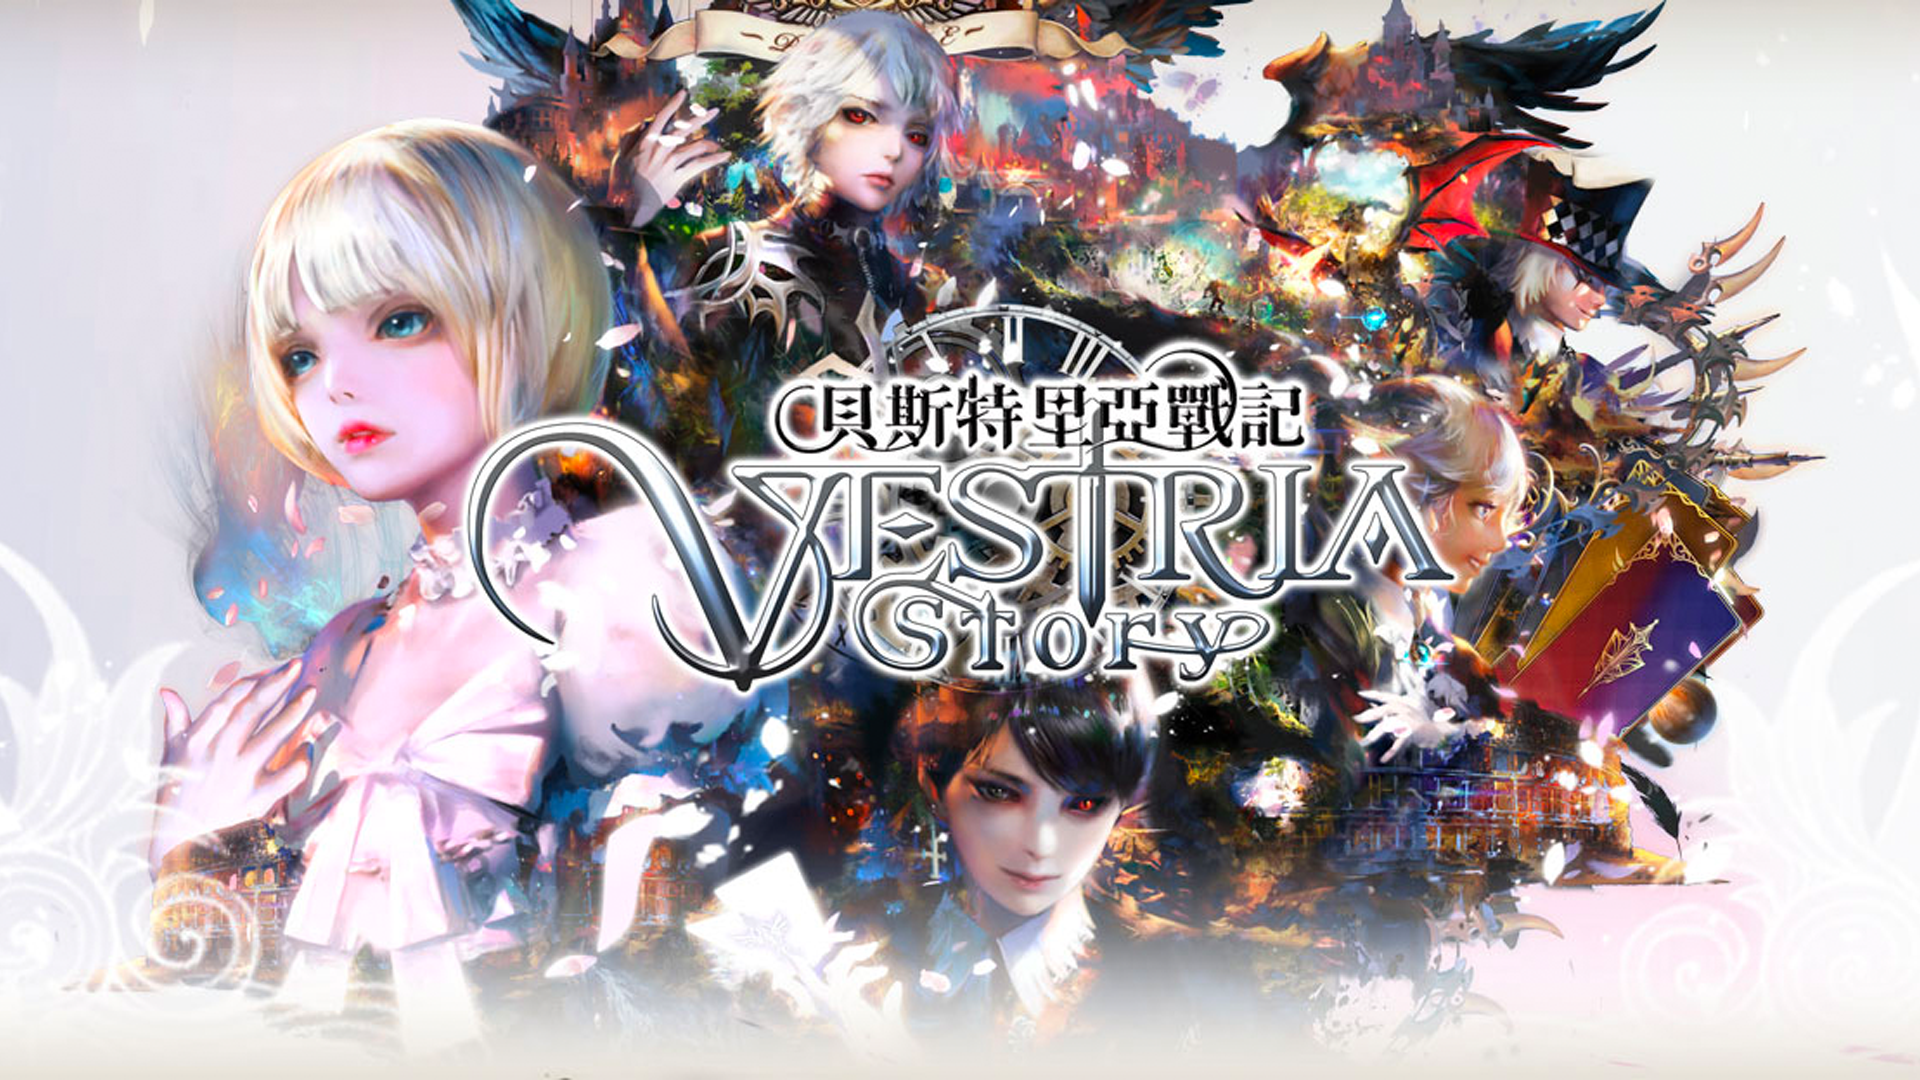 Banner of Câu chuyện Vestria 1.11.0